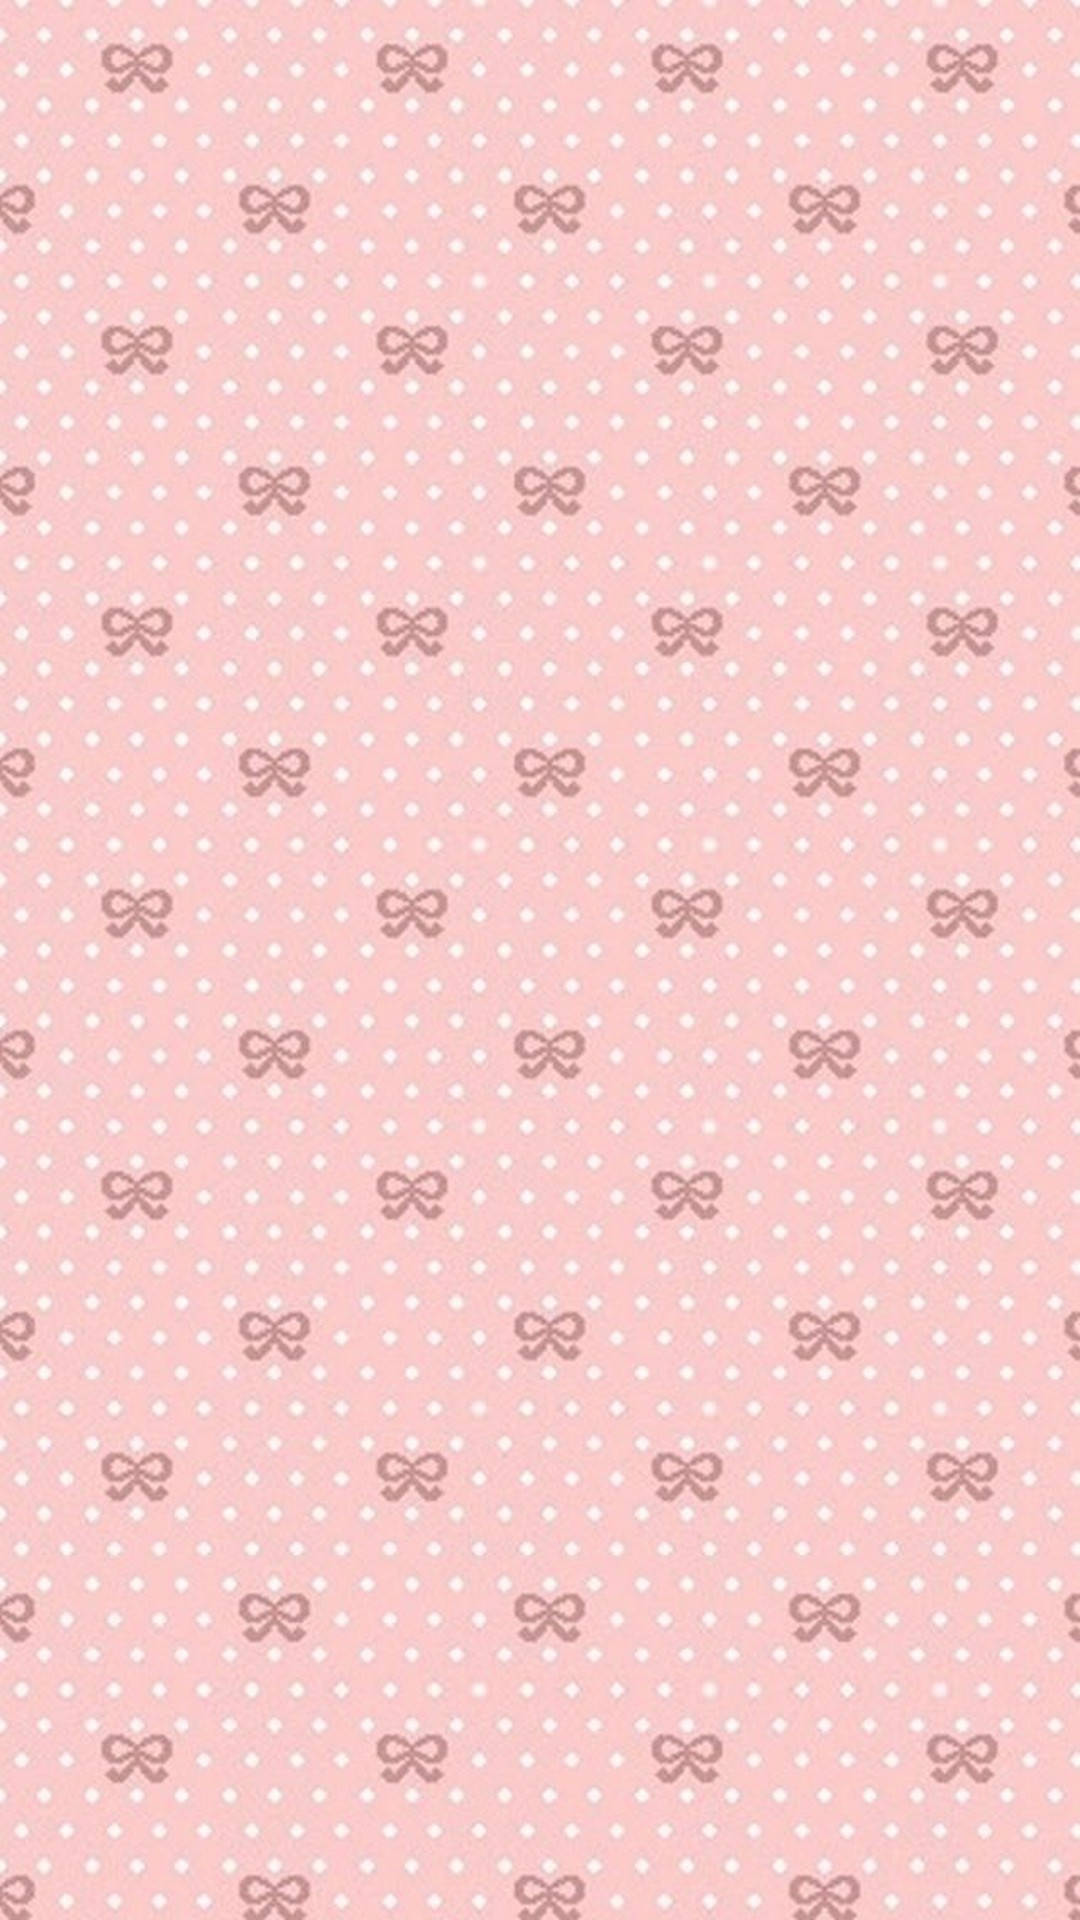 Cute And Pink Small Ribbon Patterns Backdrop